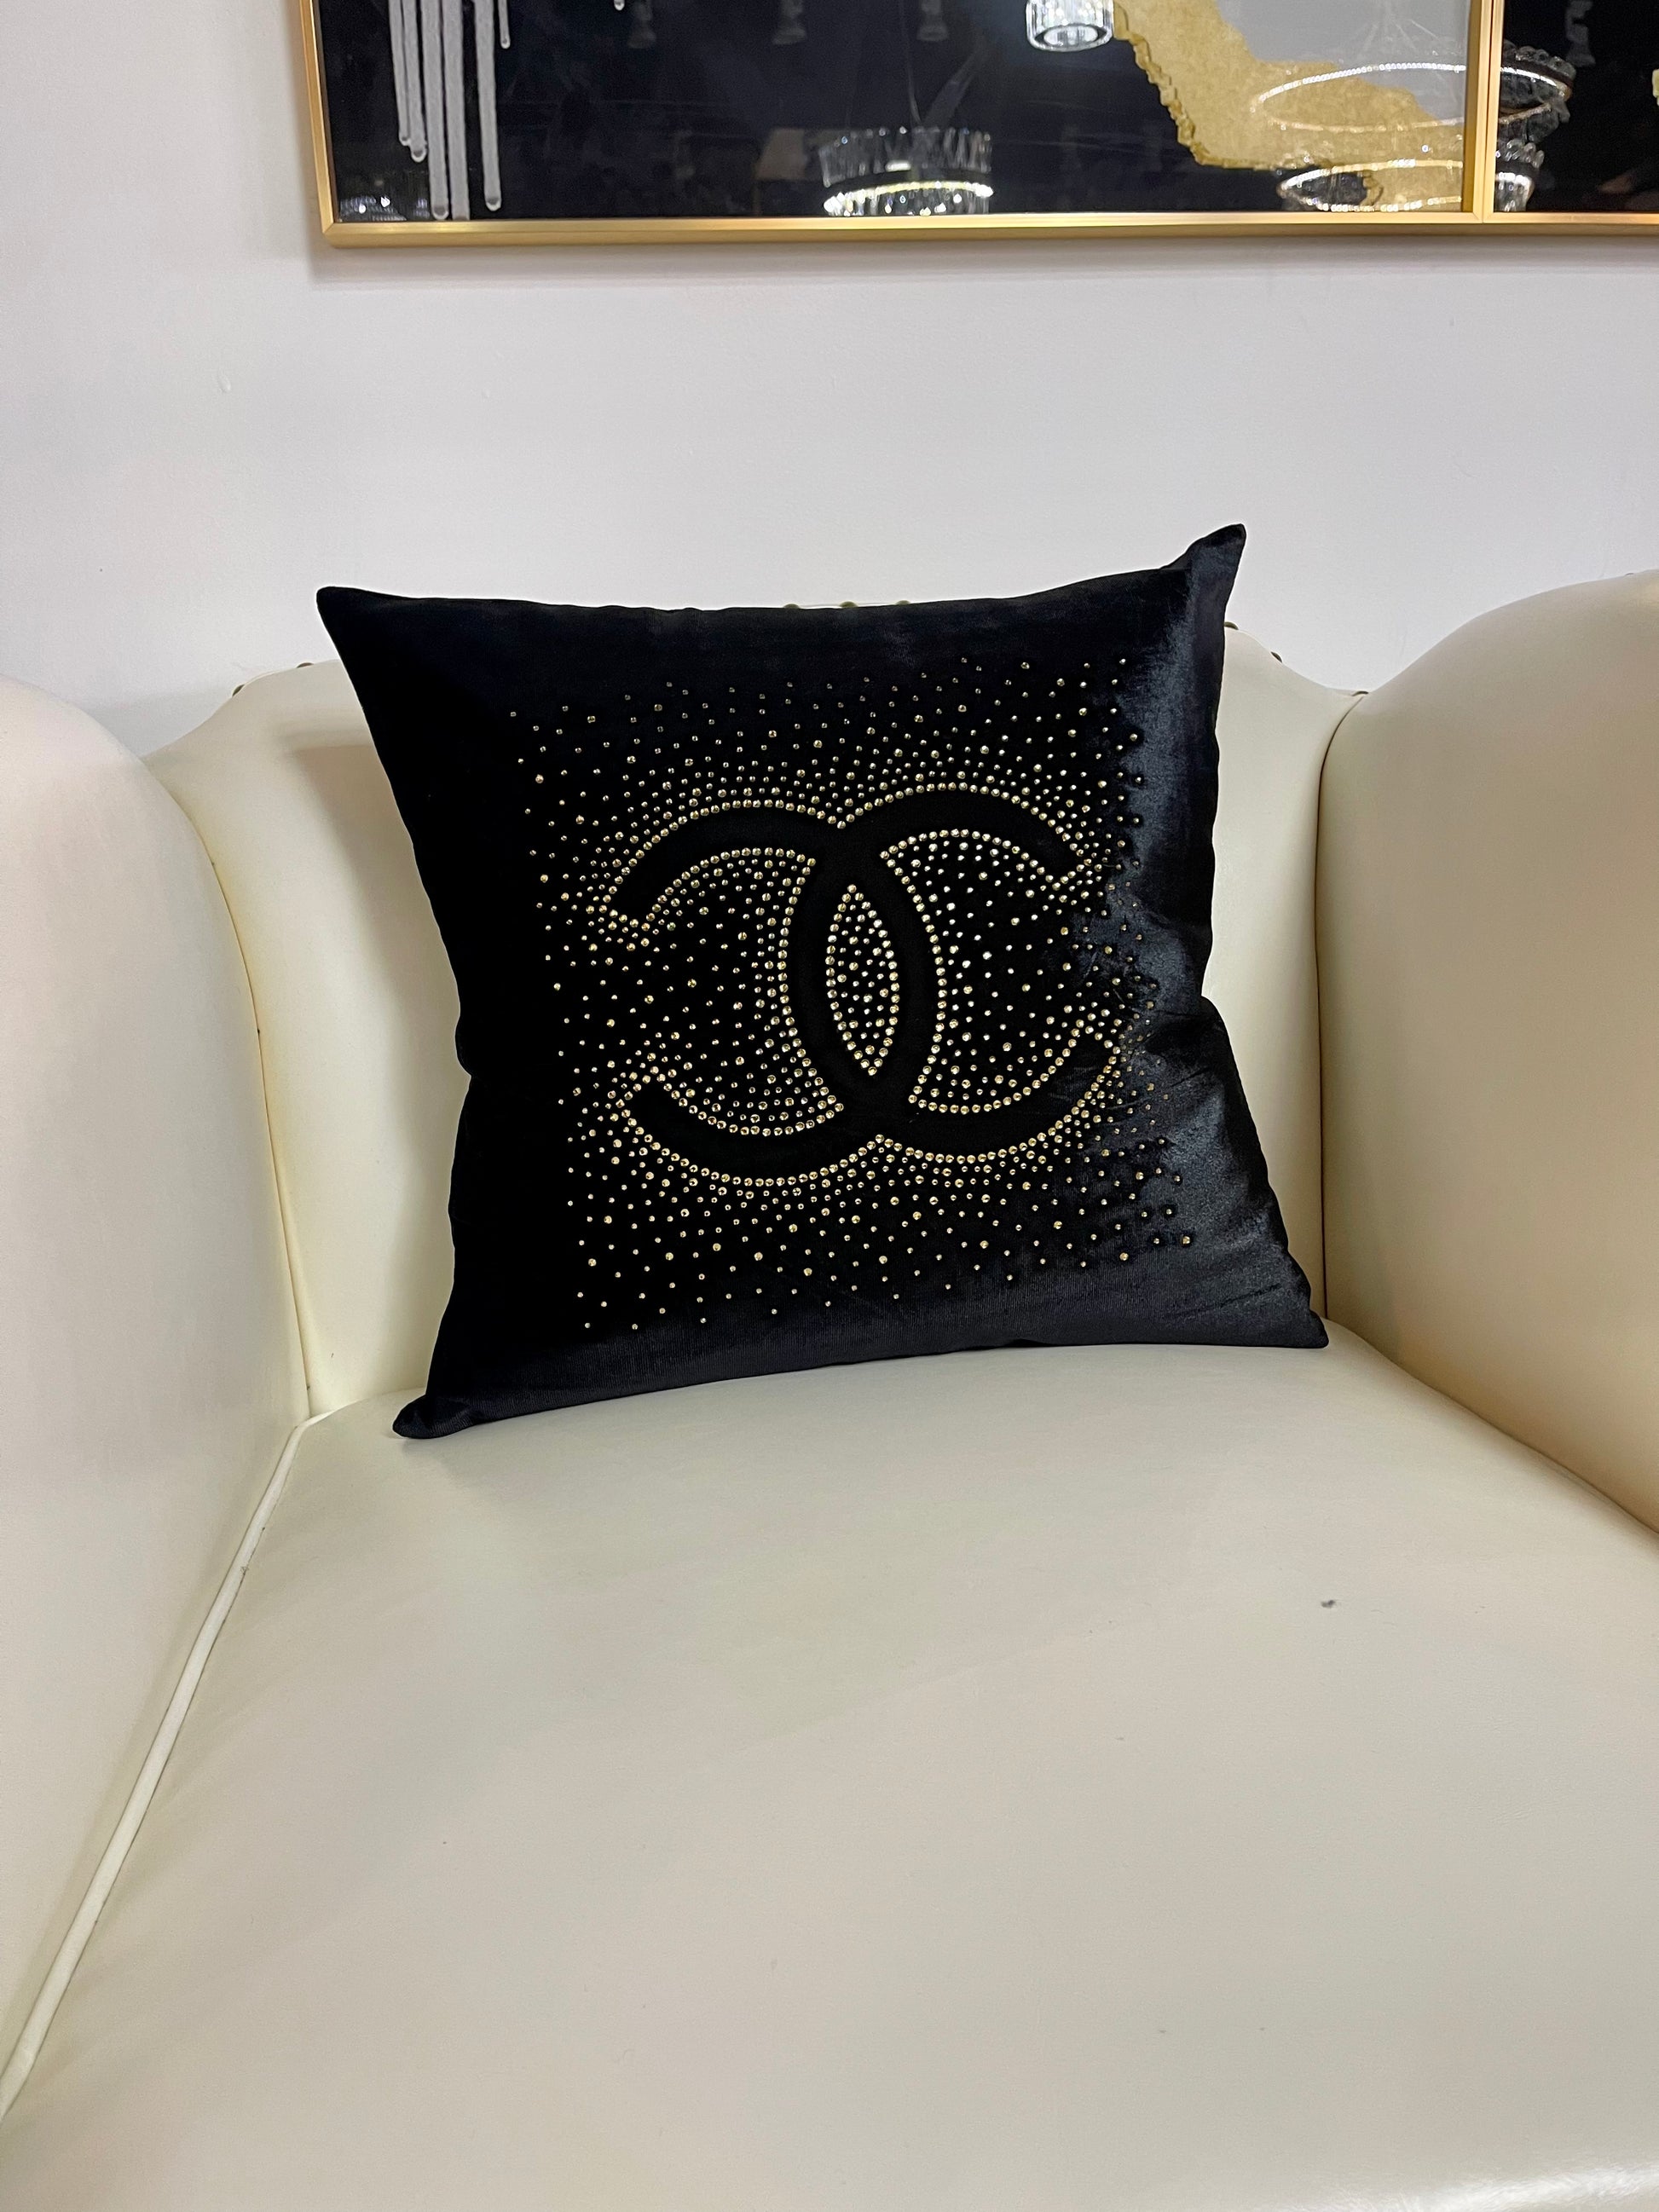 Chanel Pillow, Ivory/Dark Gray/Black, New in Dustbag GA001 - Julia